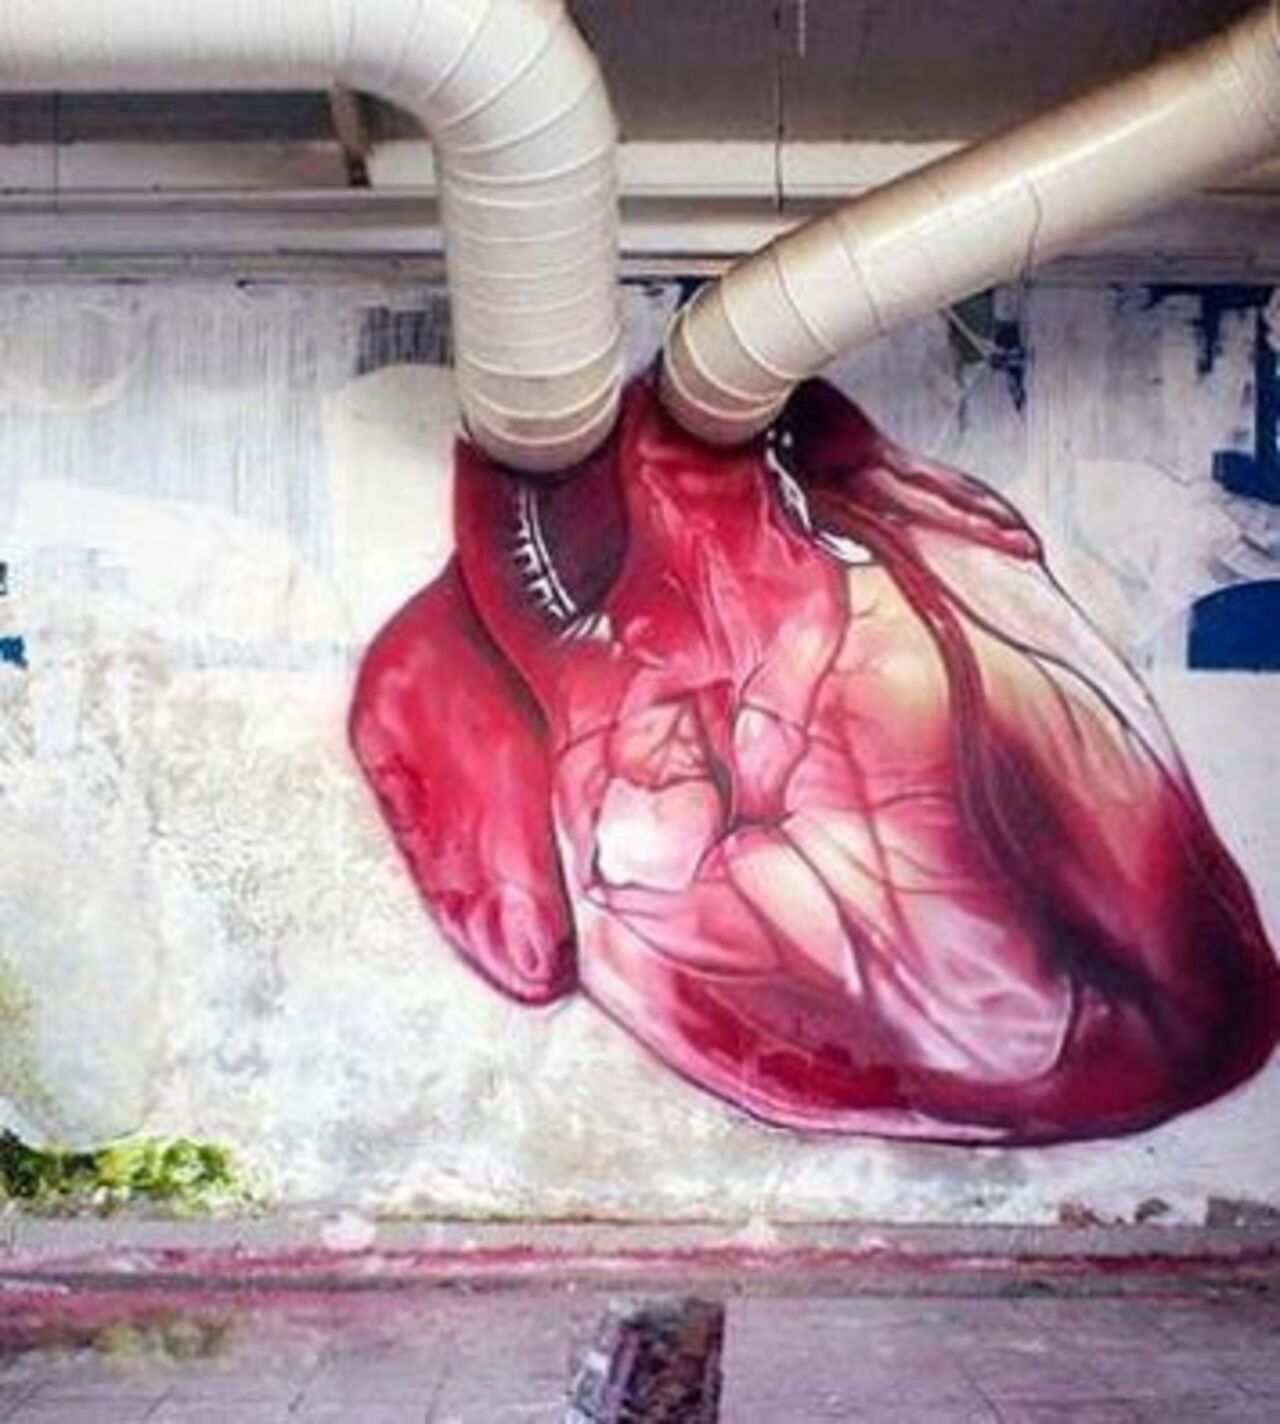 #Heart – Creative #Streetart | Be ▲rtist - Be ▲rt https://beartistbeart.com/2016/08/22/heart-creative-streetart/?utm_campaign=crowdfire&utm_content=crowdfire&utm_medium=social&utm_source=twitter https://t.co/JbVKocsm4k